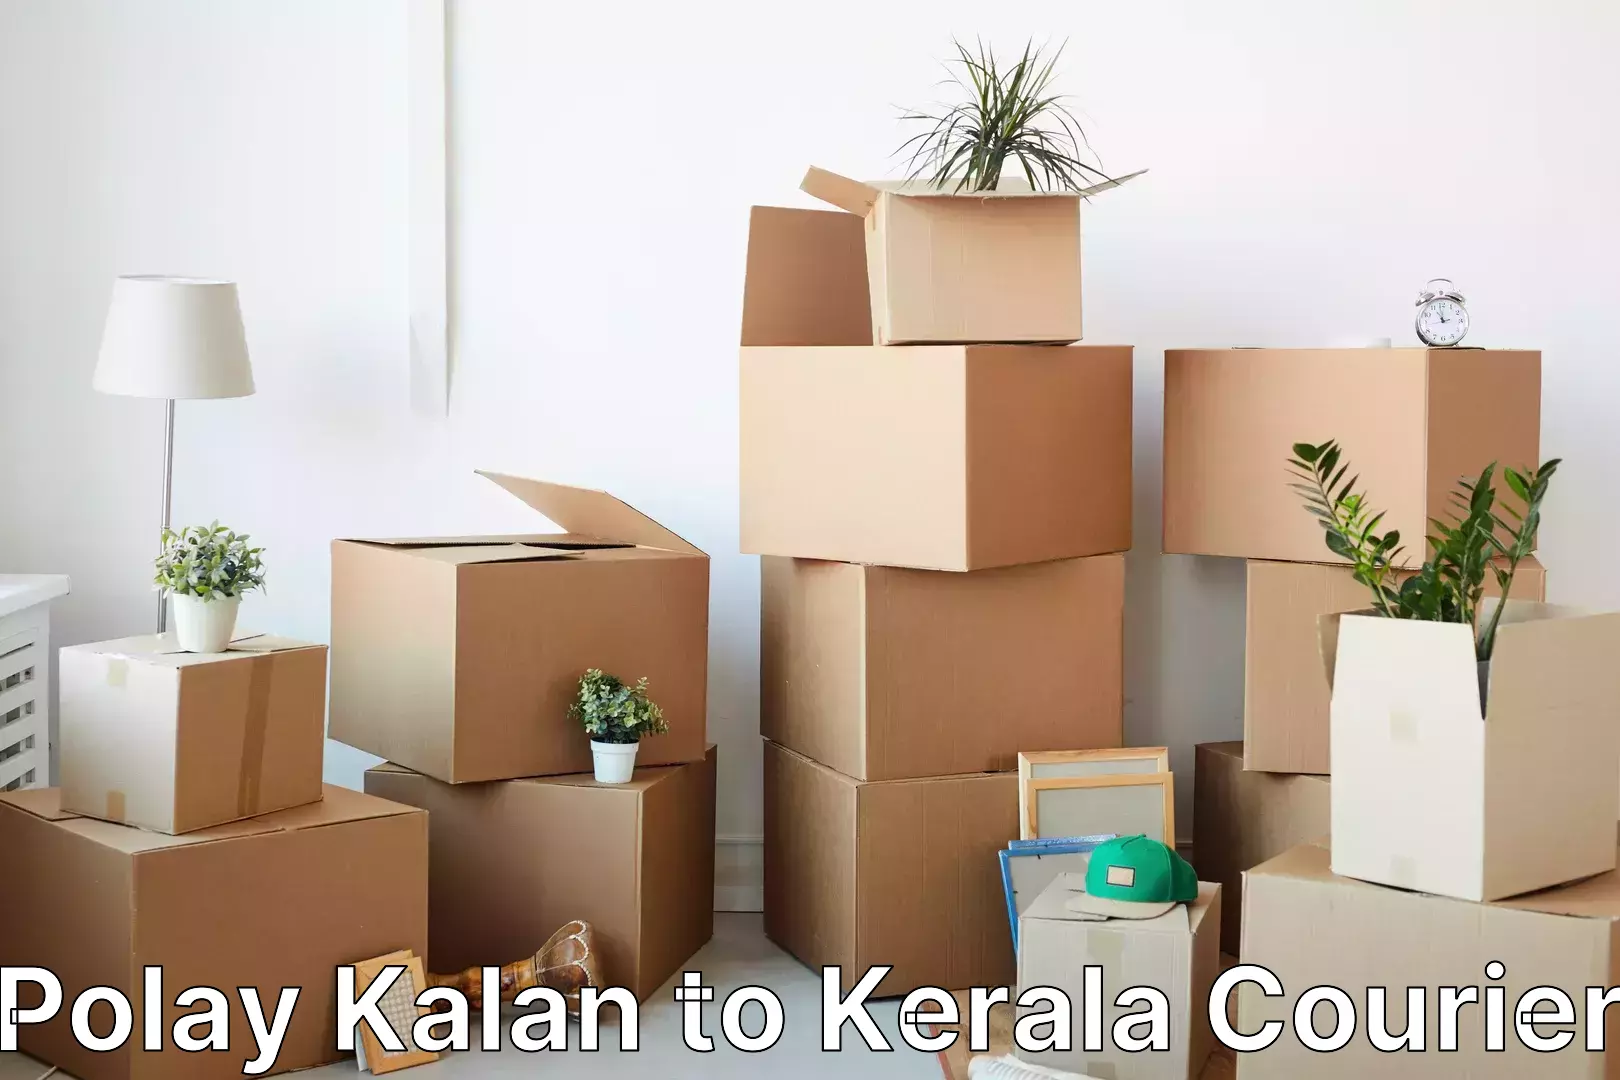 Flexible delivery schedules Polay Kalan to Kerala